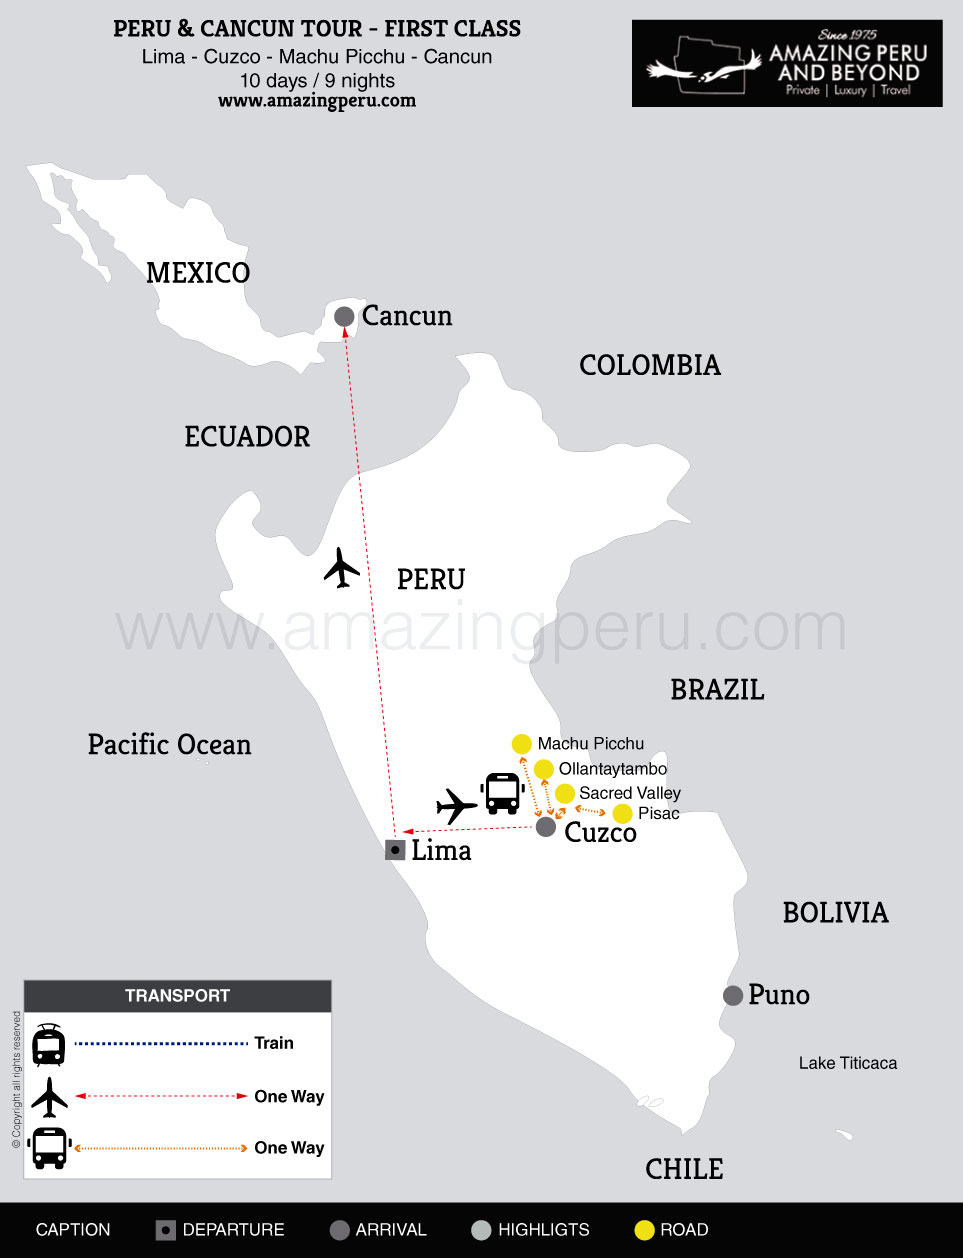 2023 Peru & Cancun Tour - First Class - 10 days / 9 nights.